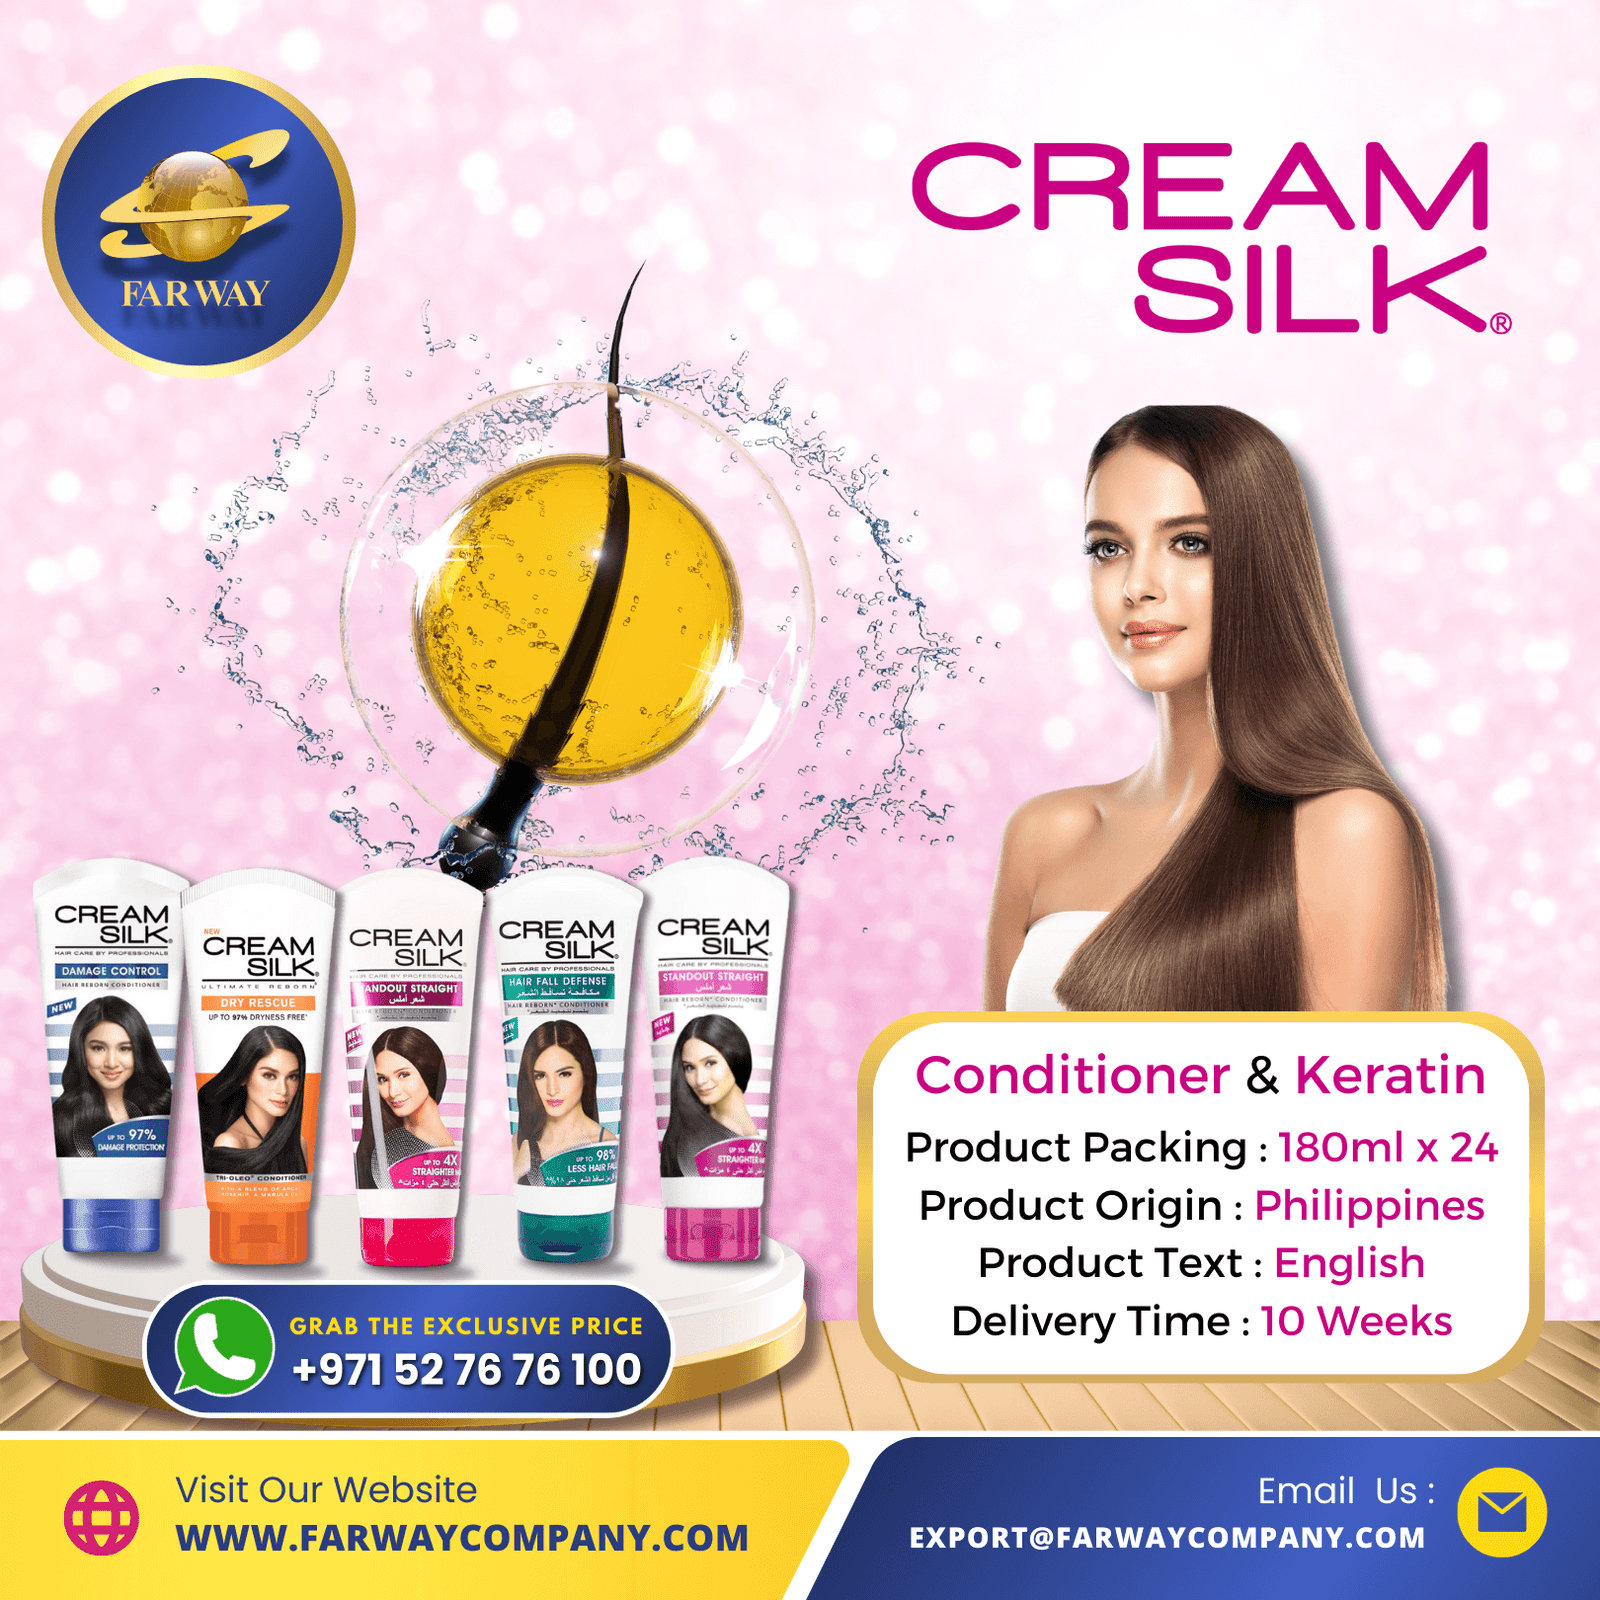 Cream Silk Conditioner & Keratin Exporter & FMCG Distributor in Dubai, UAE, Middle East